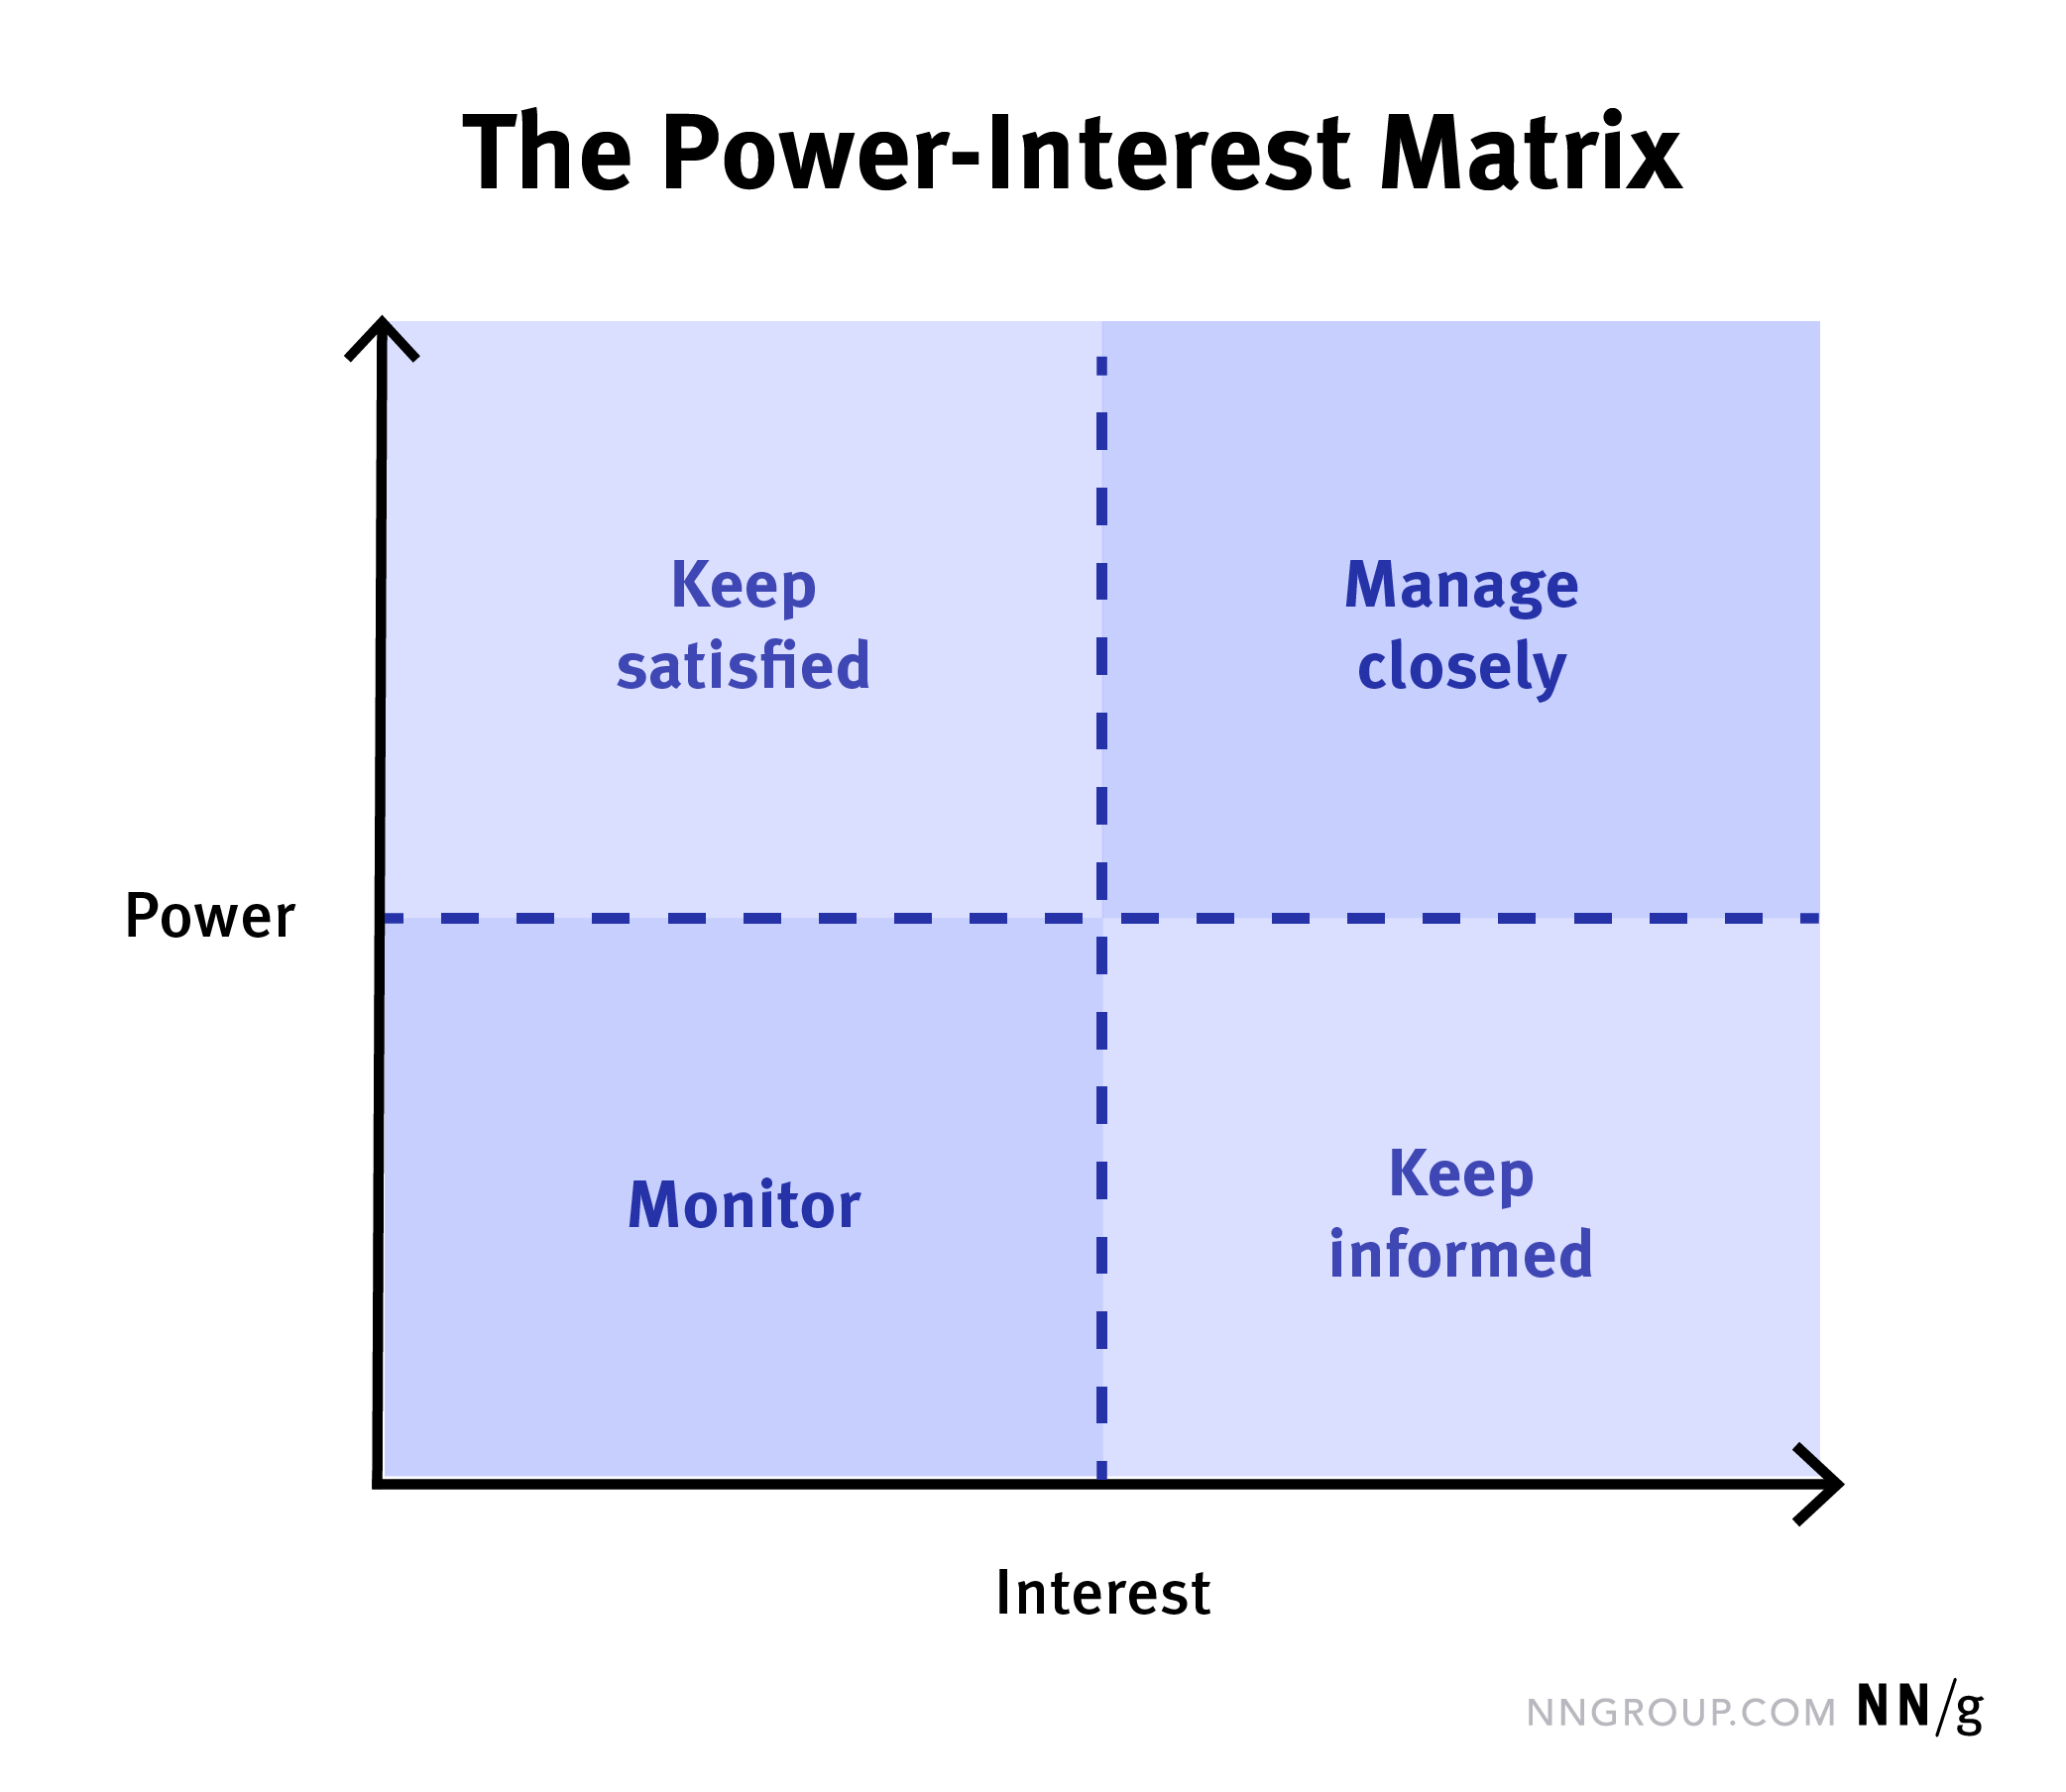 <p>Stakeholder approach based upon stakeholder interest &amp; power</p><ul><li><p>low &amp; low = monitor </p></li><li><p>Low interest &amp; high power = keep satisfied </p></li><li><p>High interest &amp; low power = keep informed</p></li><li><p>High &amp; high = manage closely </p></li></ul>